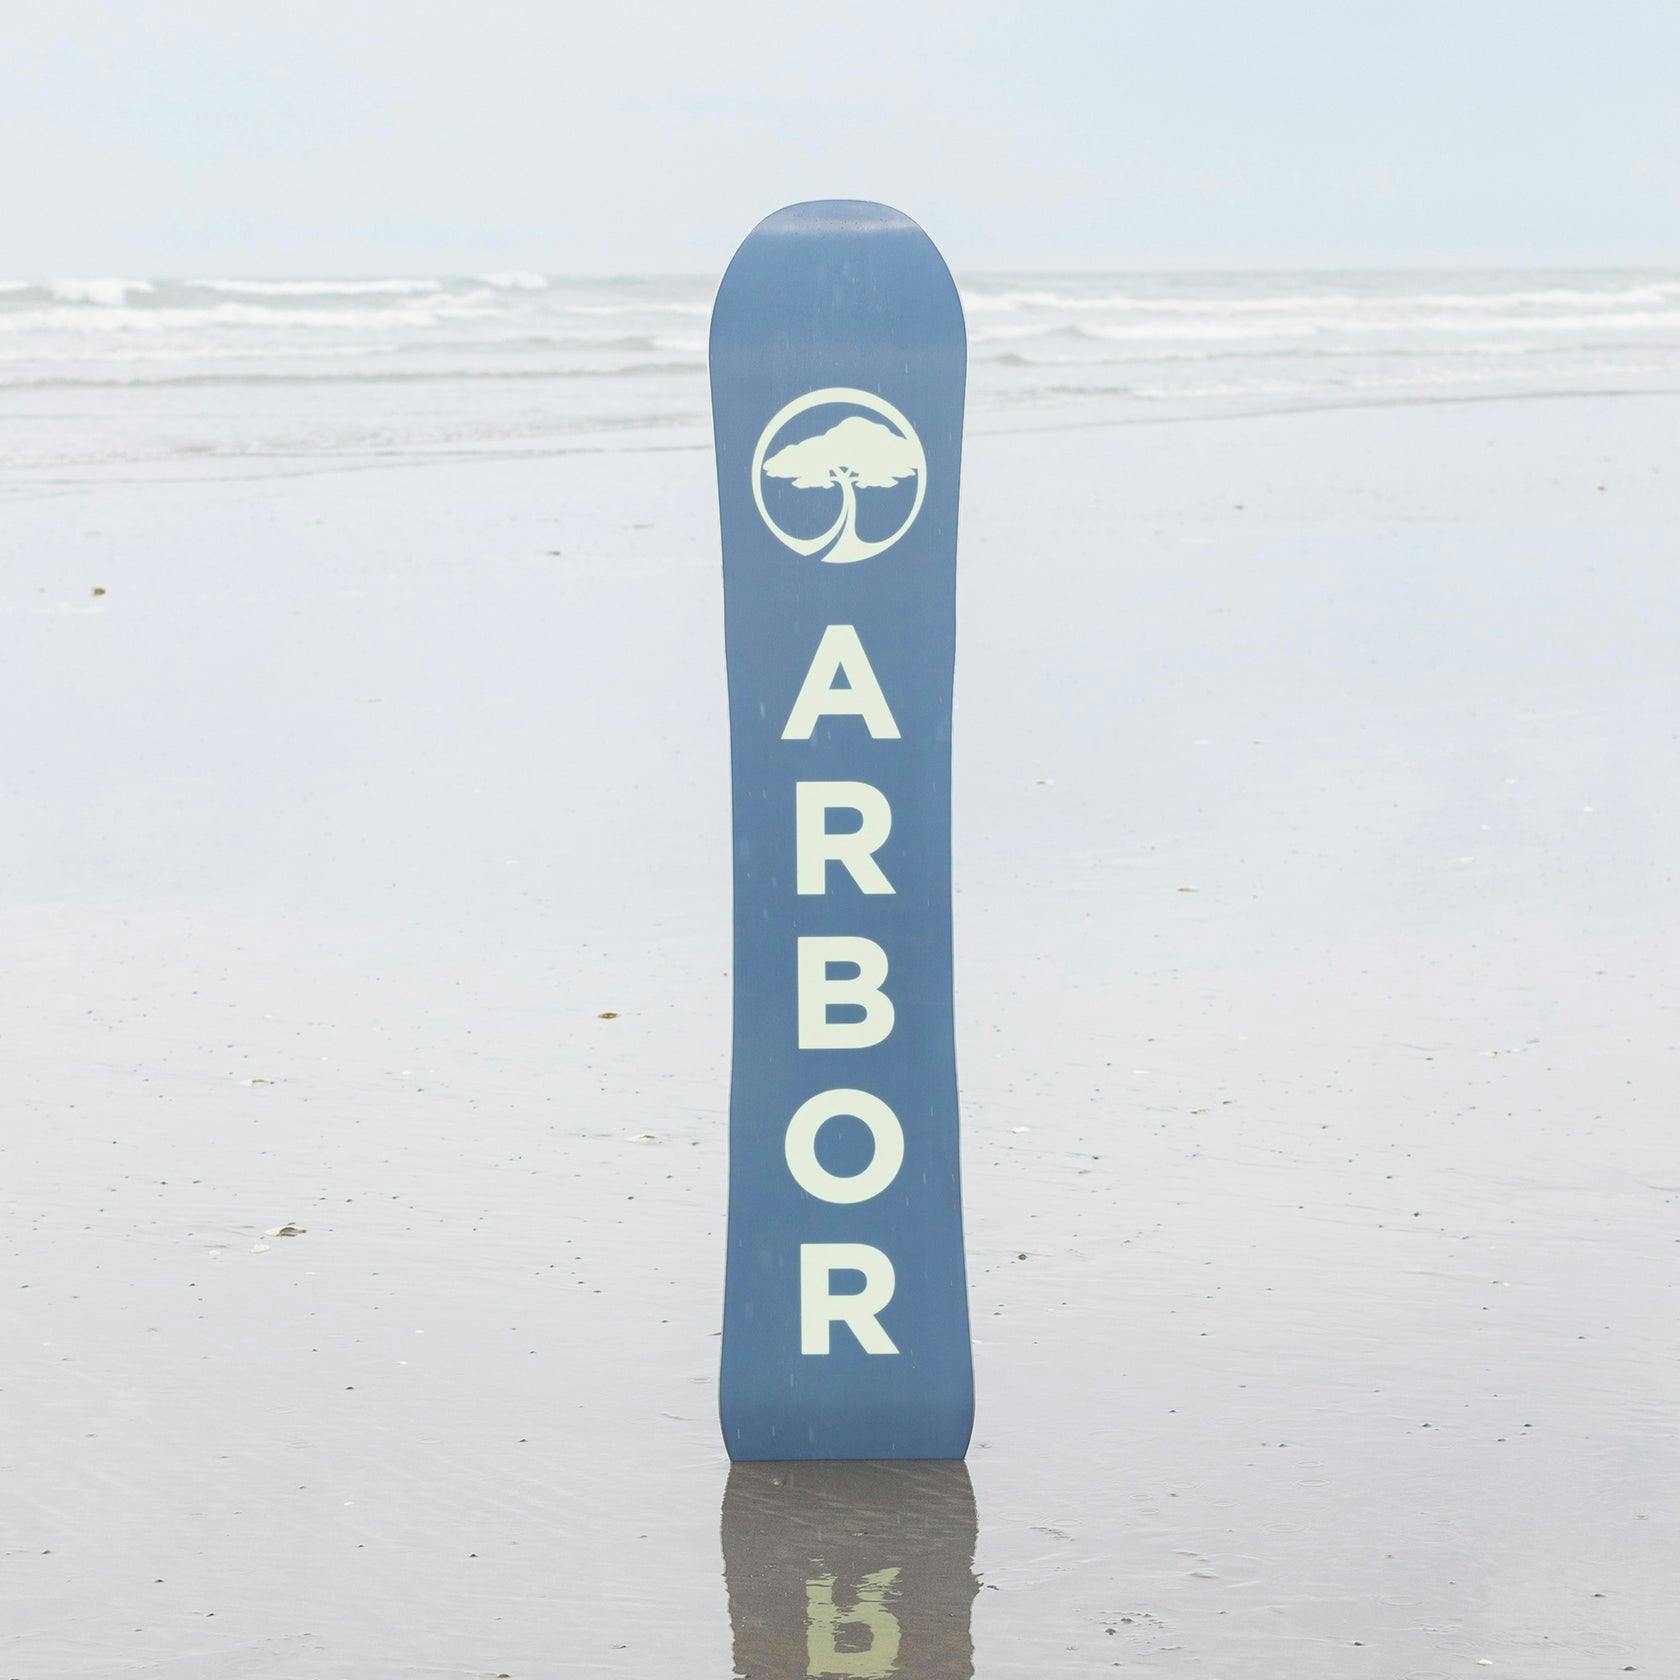 Arbor Foundation Rocker Snowboard · 2023 · 158 cm